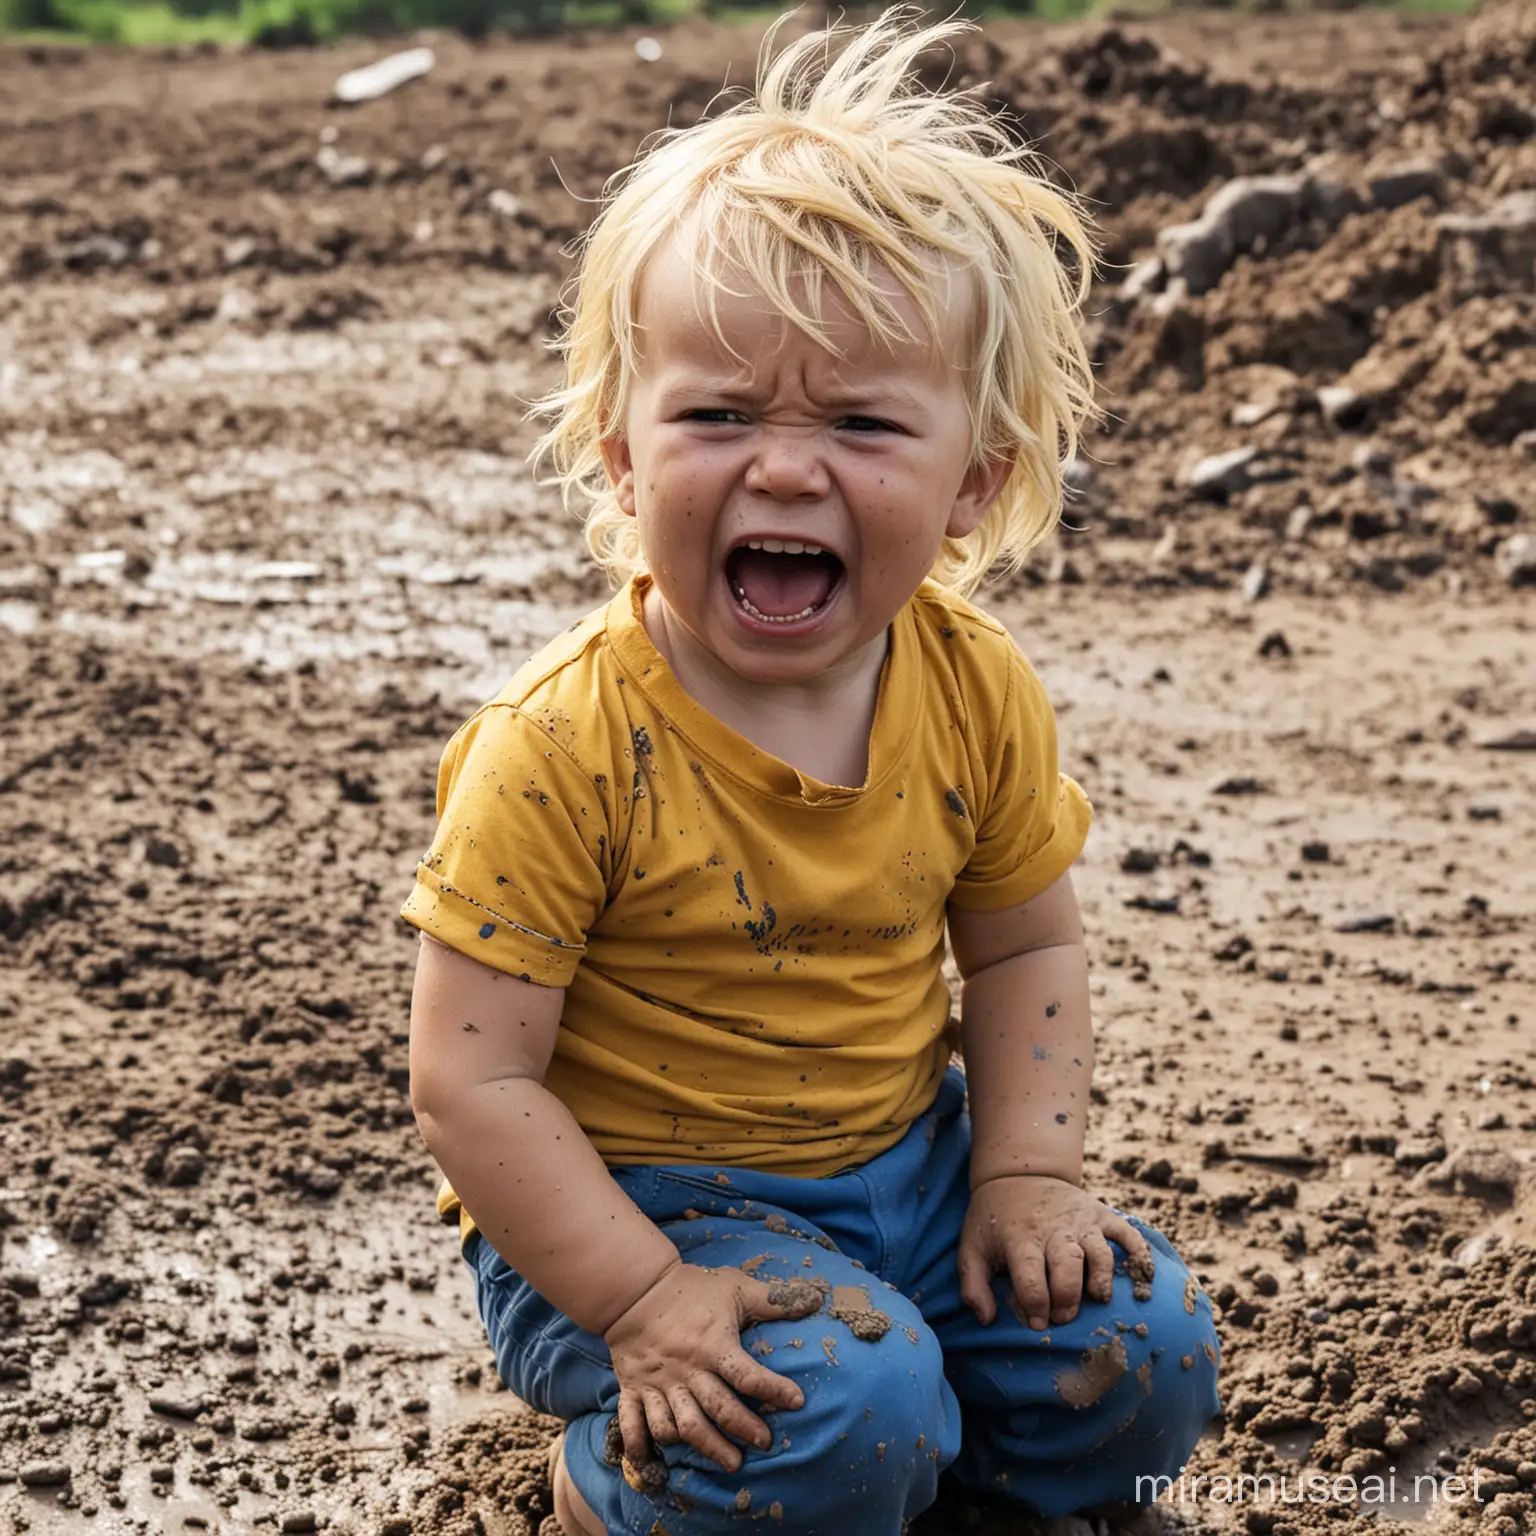 crying toddler, sitting in mud, blue pants, yellow shirt, hair dirty, dusty, screaming, bleeding, war zone, close up